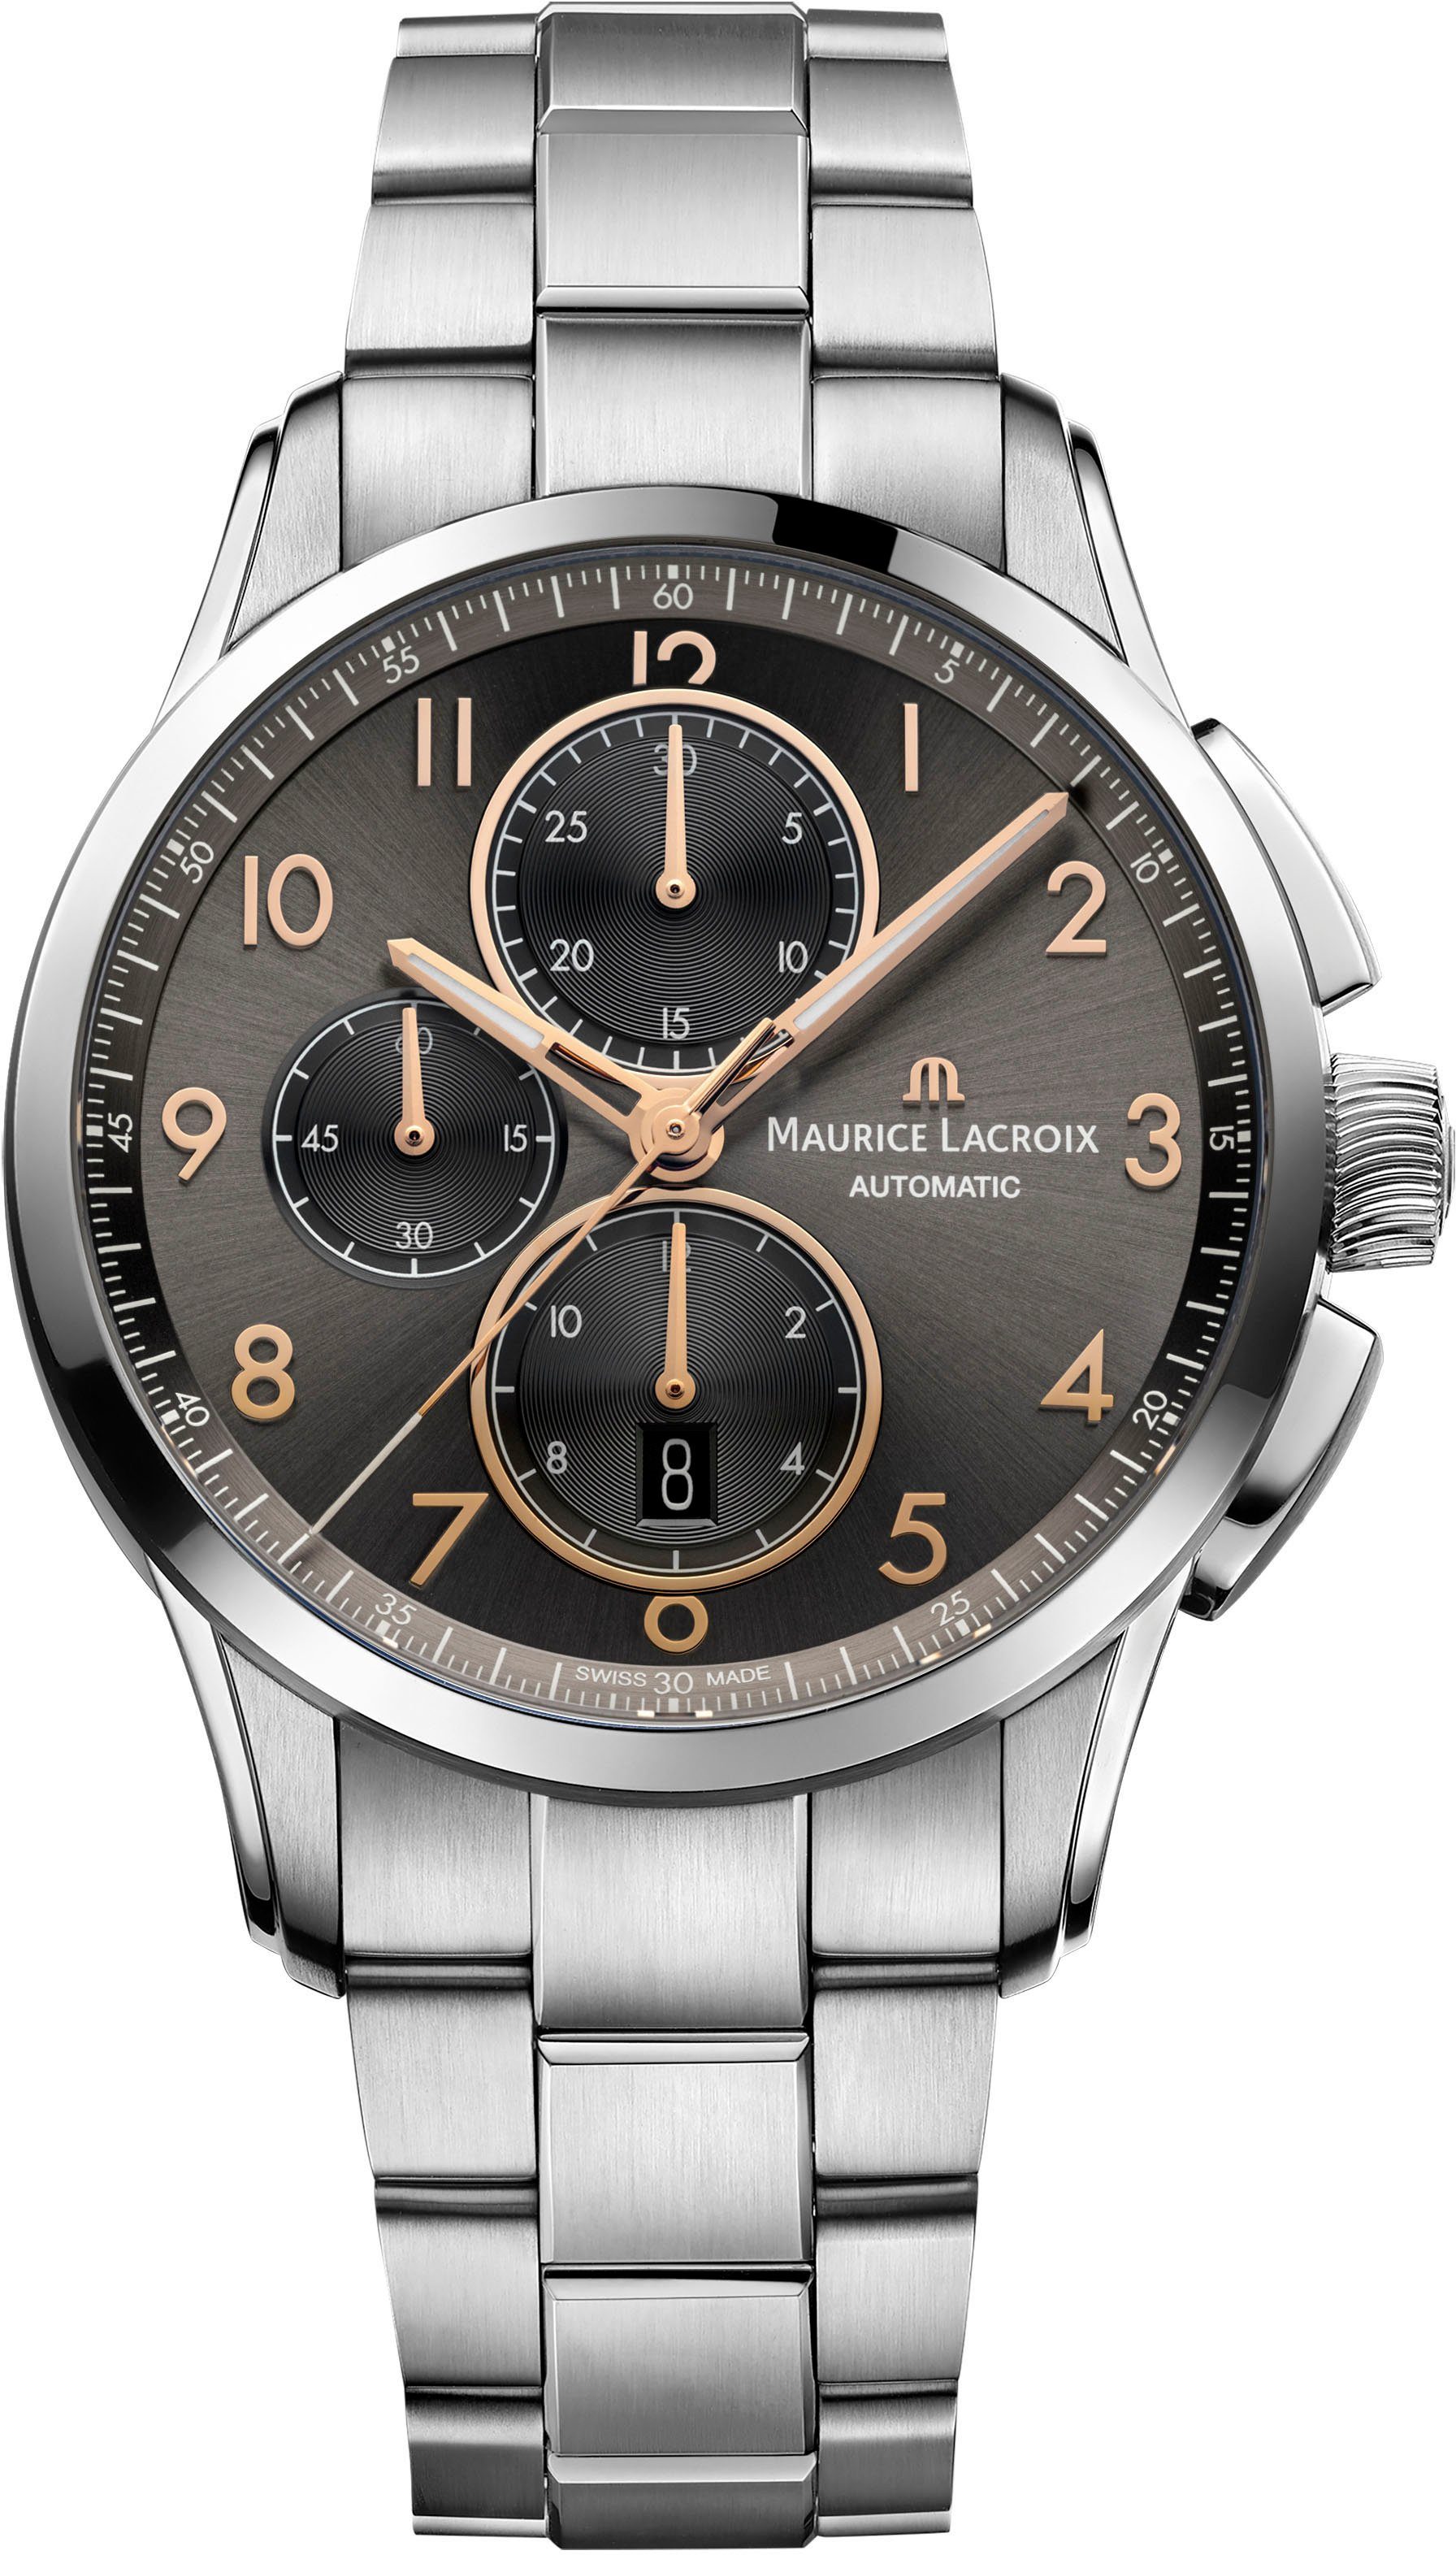 MAURICE LACROIX Chronograph Pontos Chronographe Date, PT6388-SS002-321-1, Automatik | Schweizer Uhren